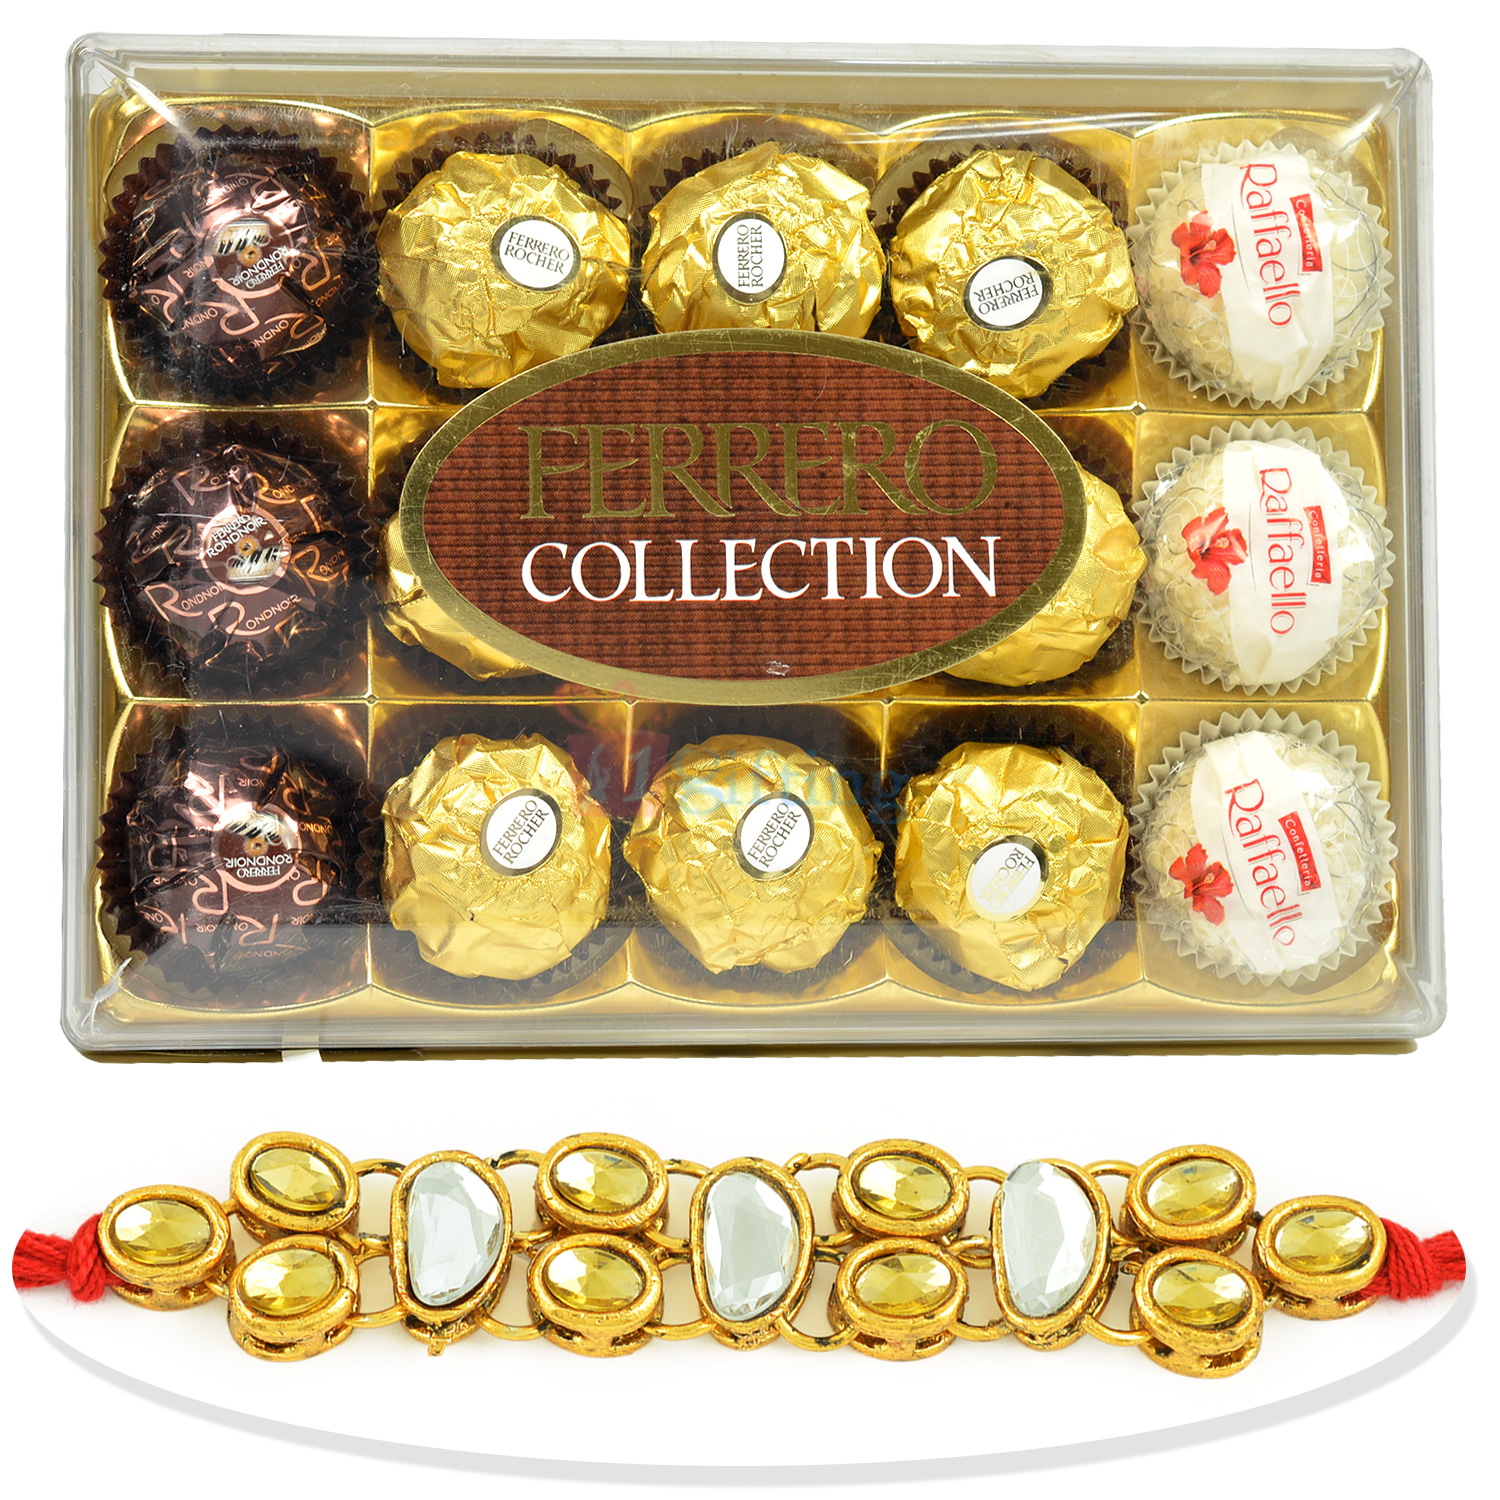 Kundan Citrine Golden Rakhi with T-15 Ferrero Collection Box